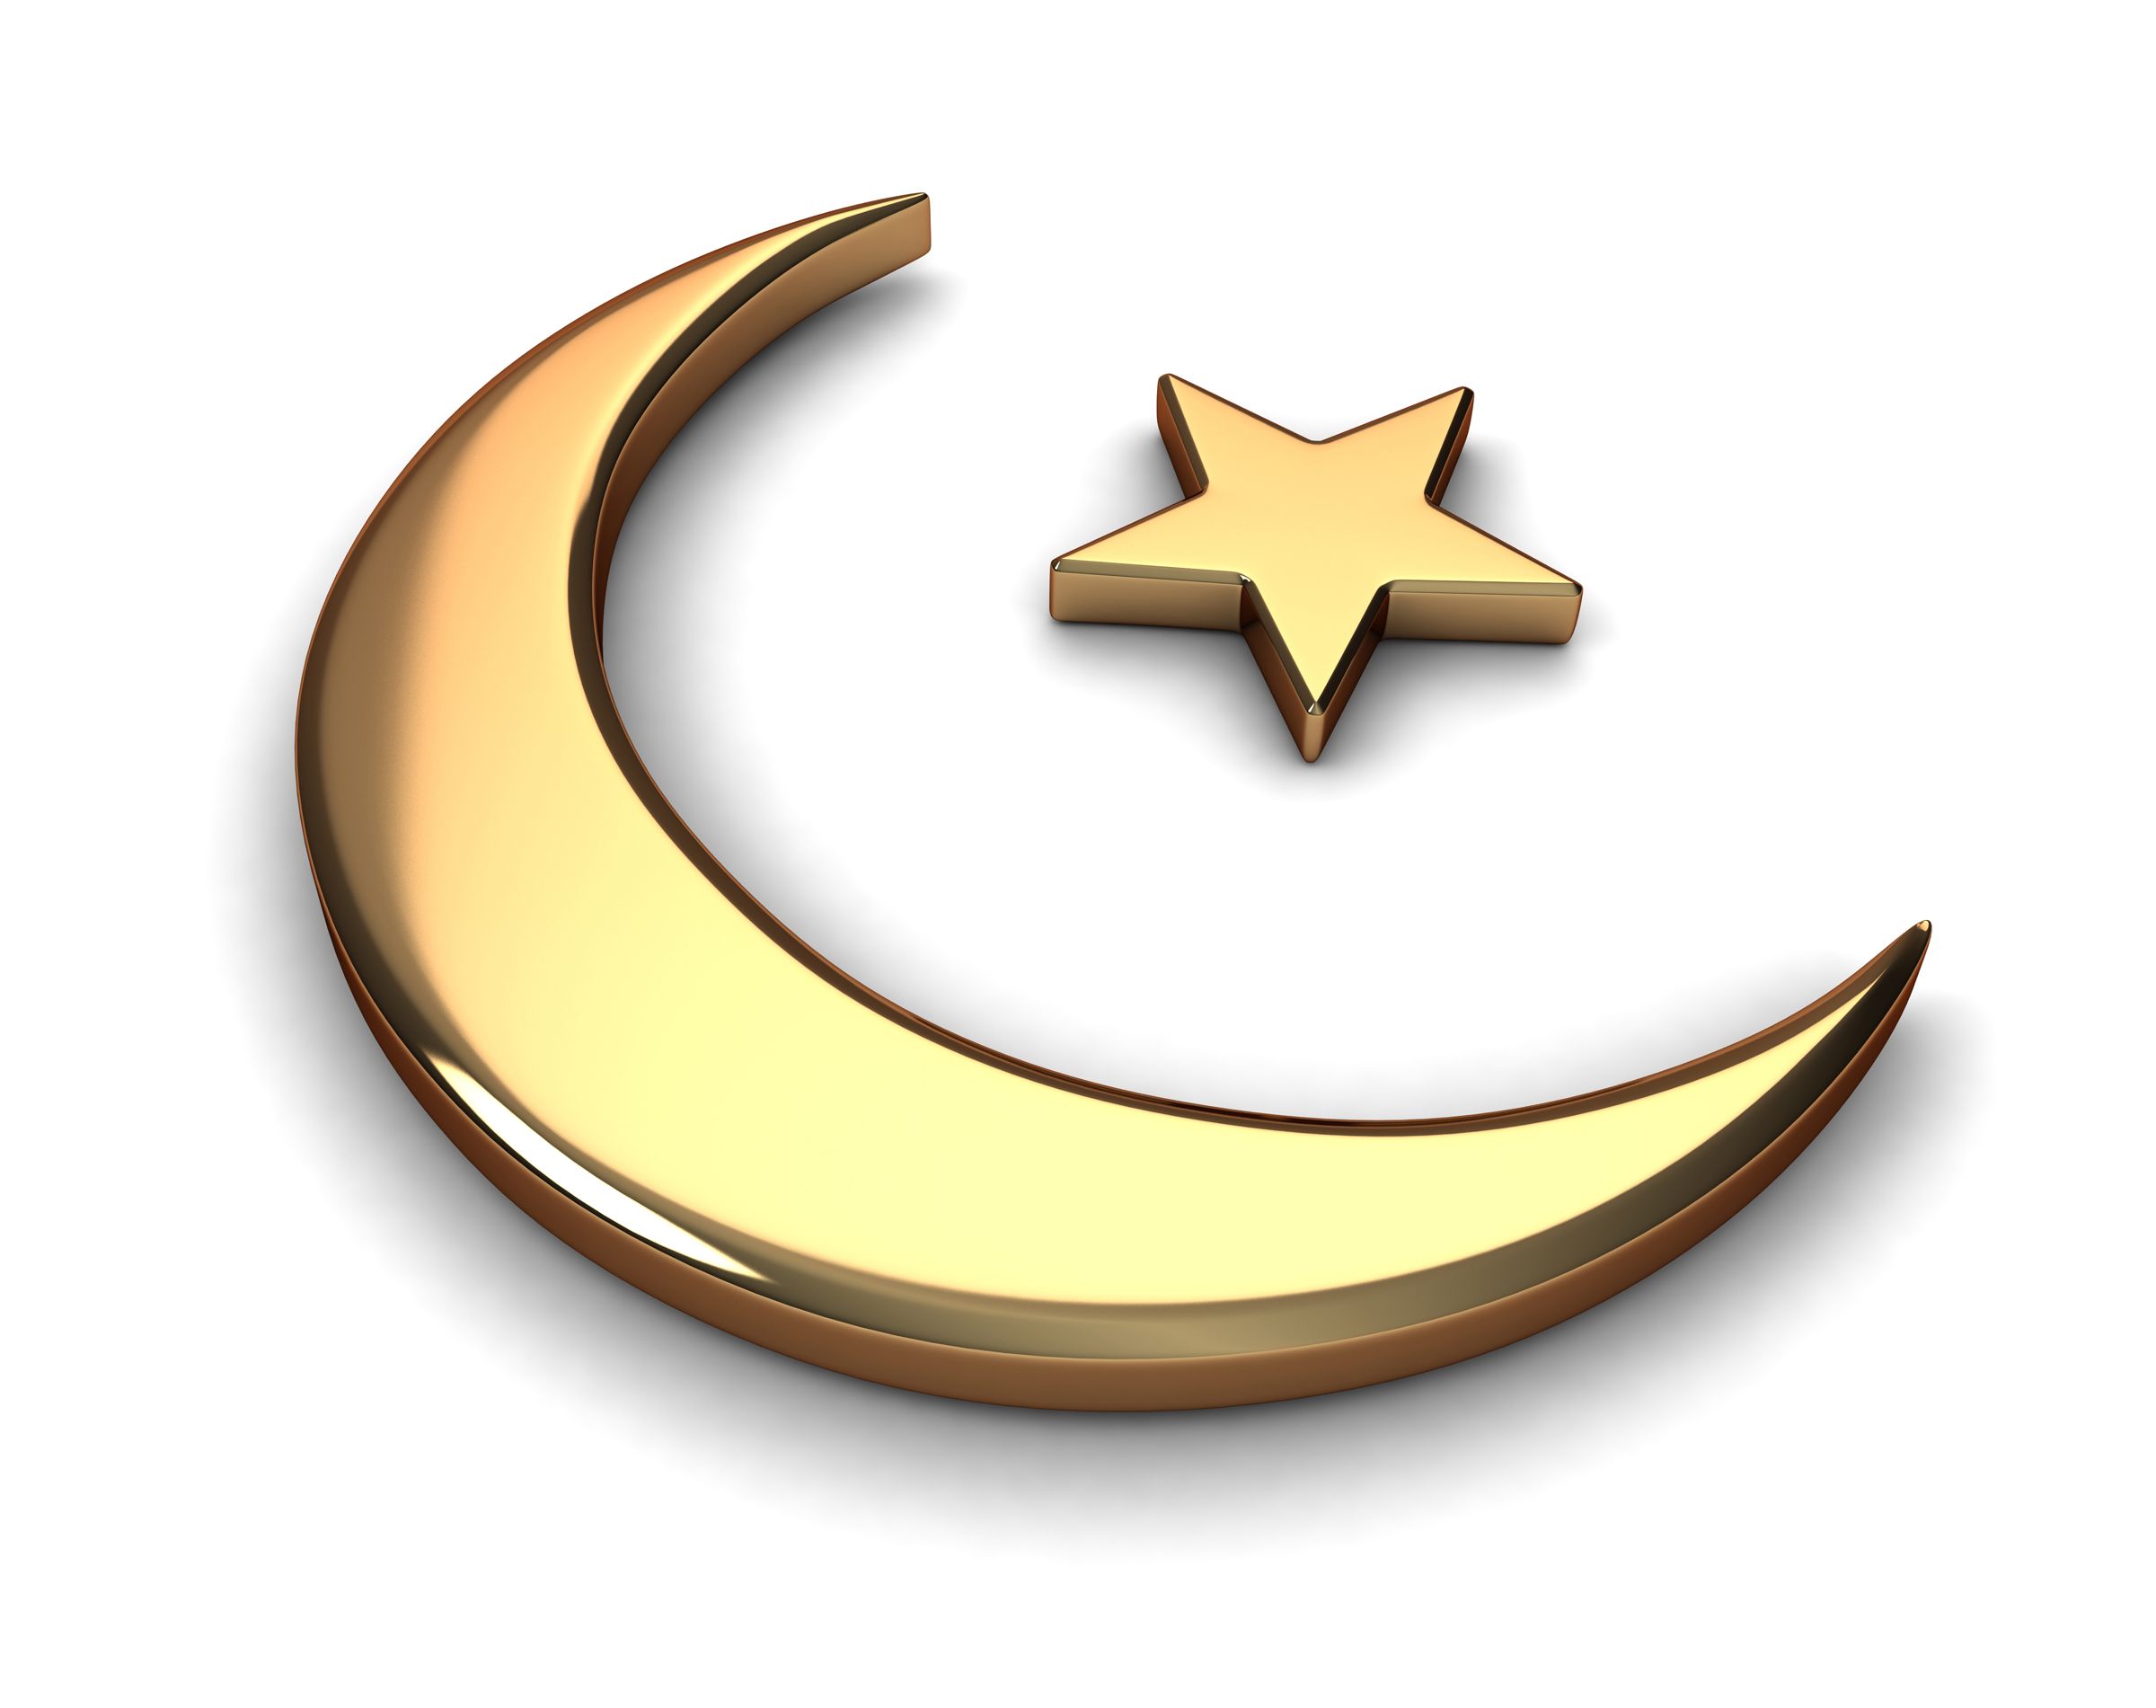 Islamic Logos